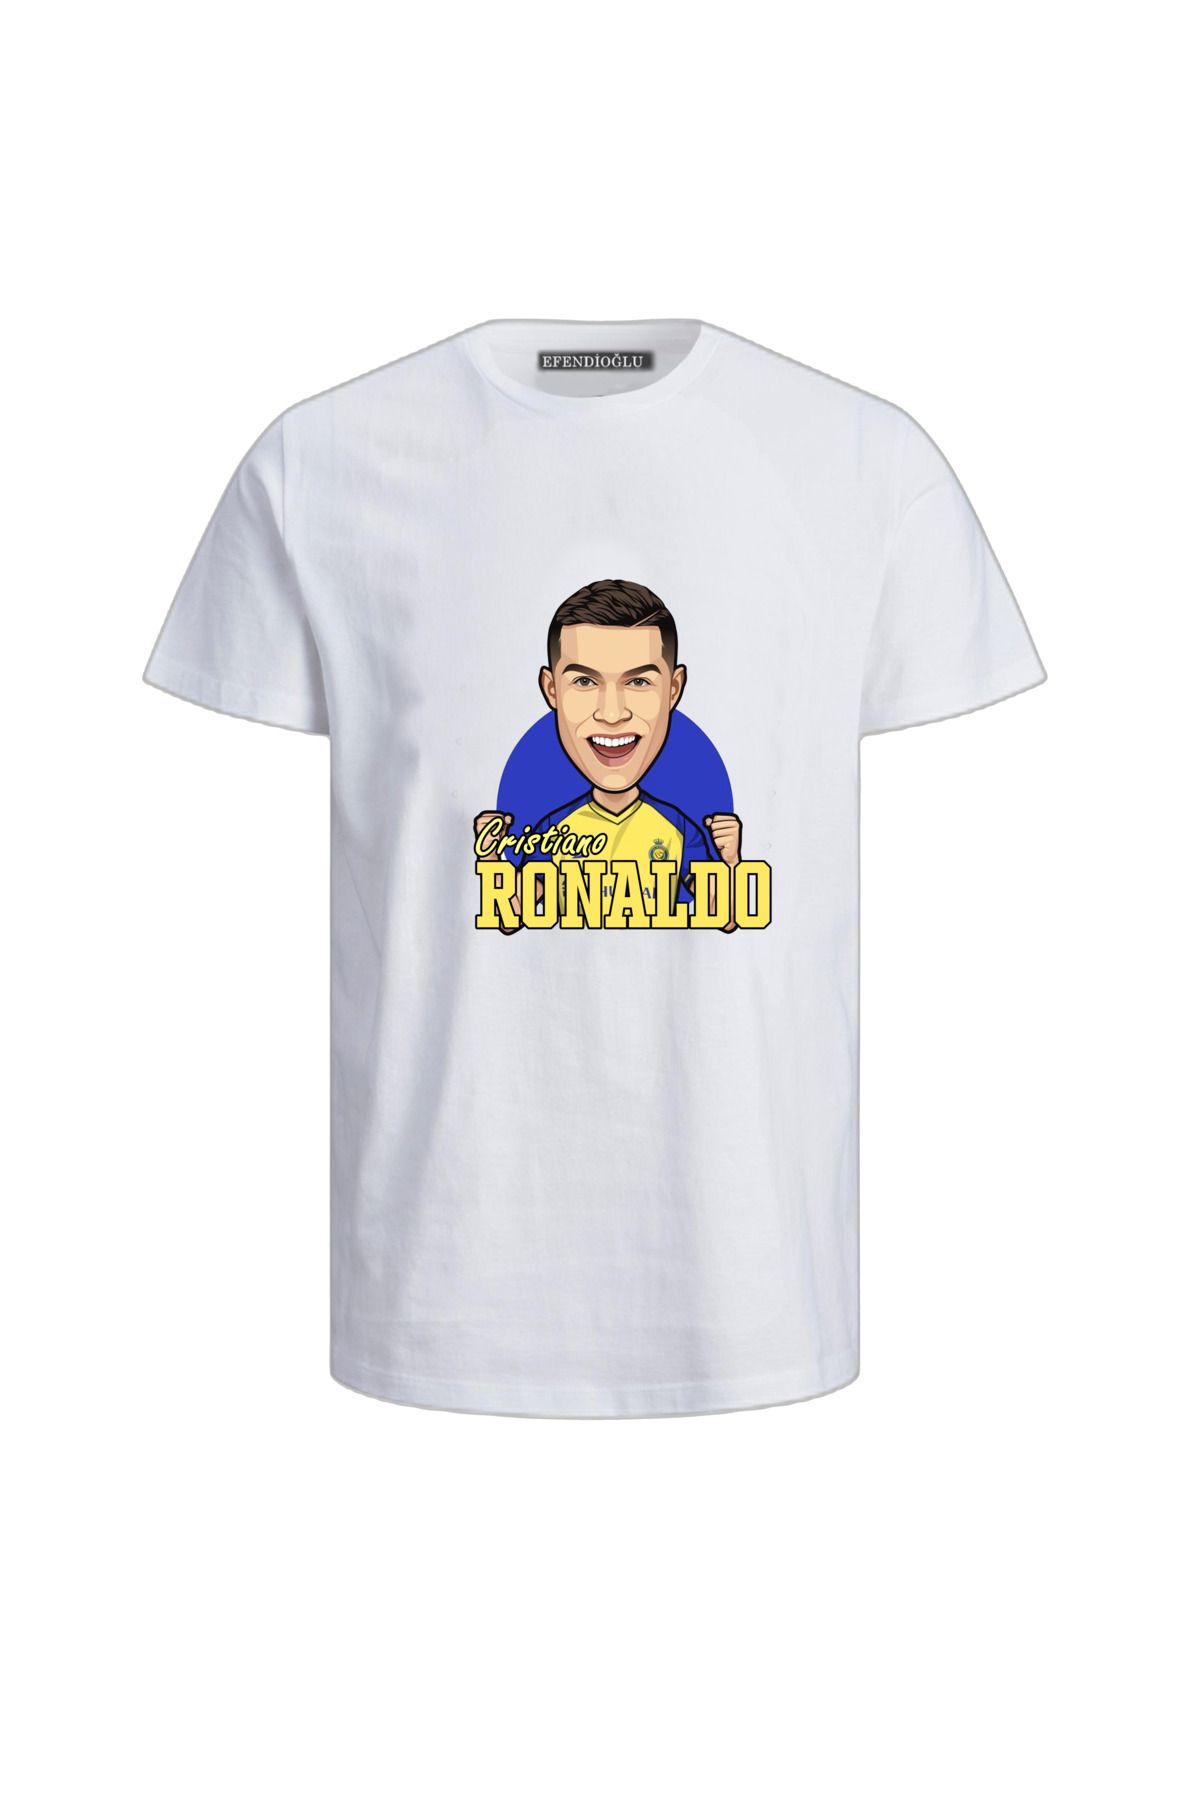 Efendioğlu Design Ronaldo Baskılı pamuklu çocuk t-shirt